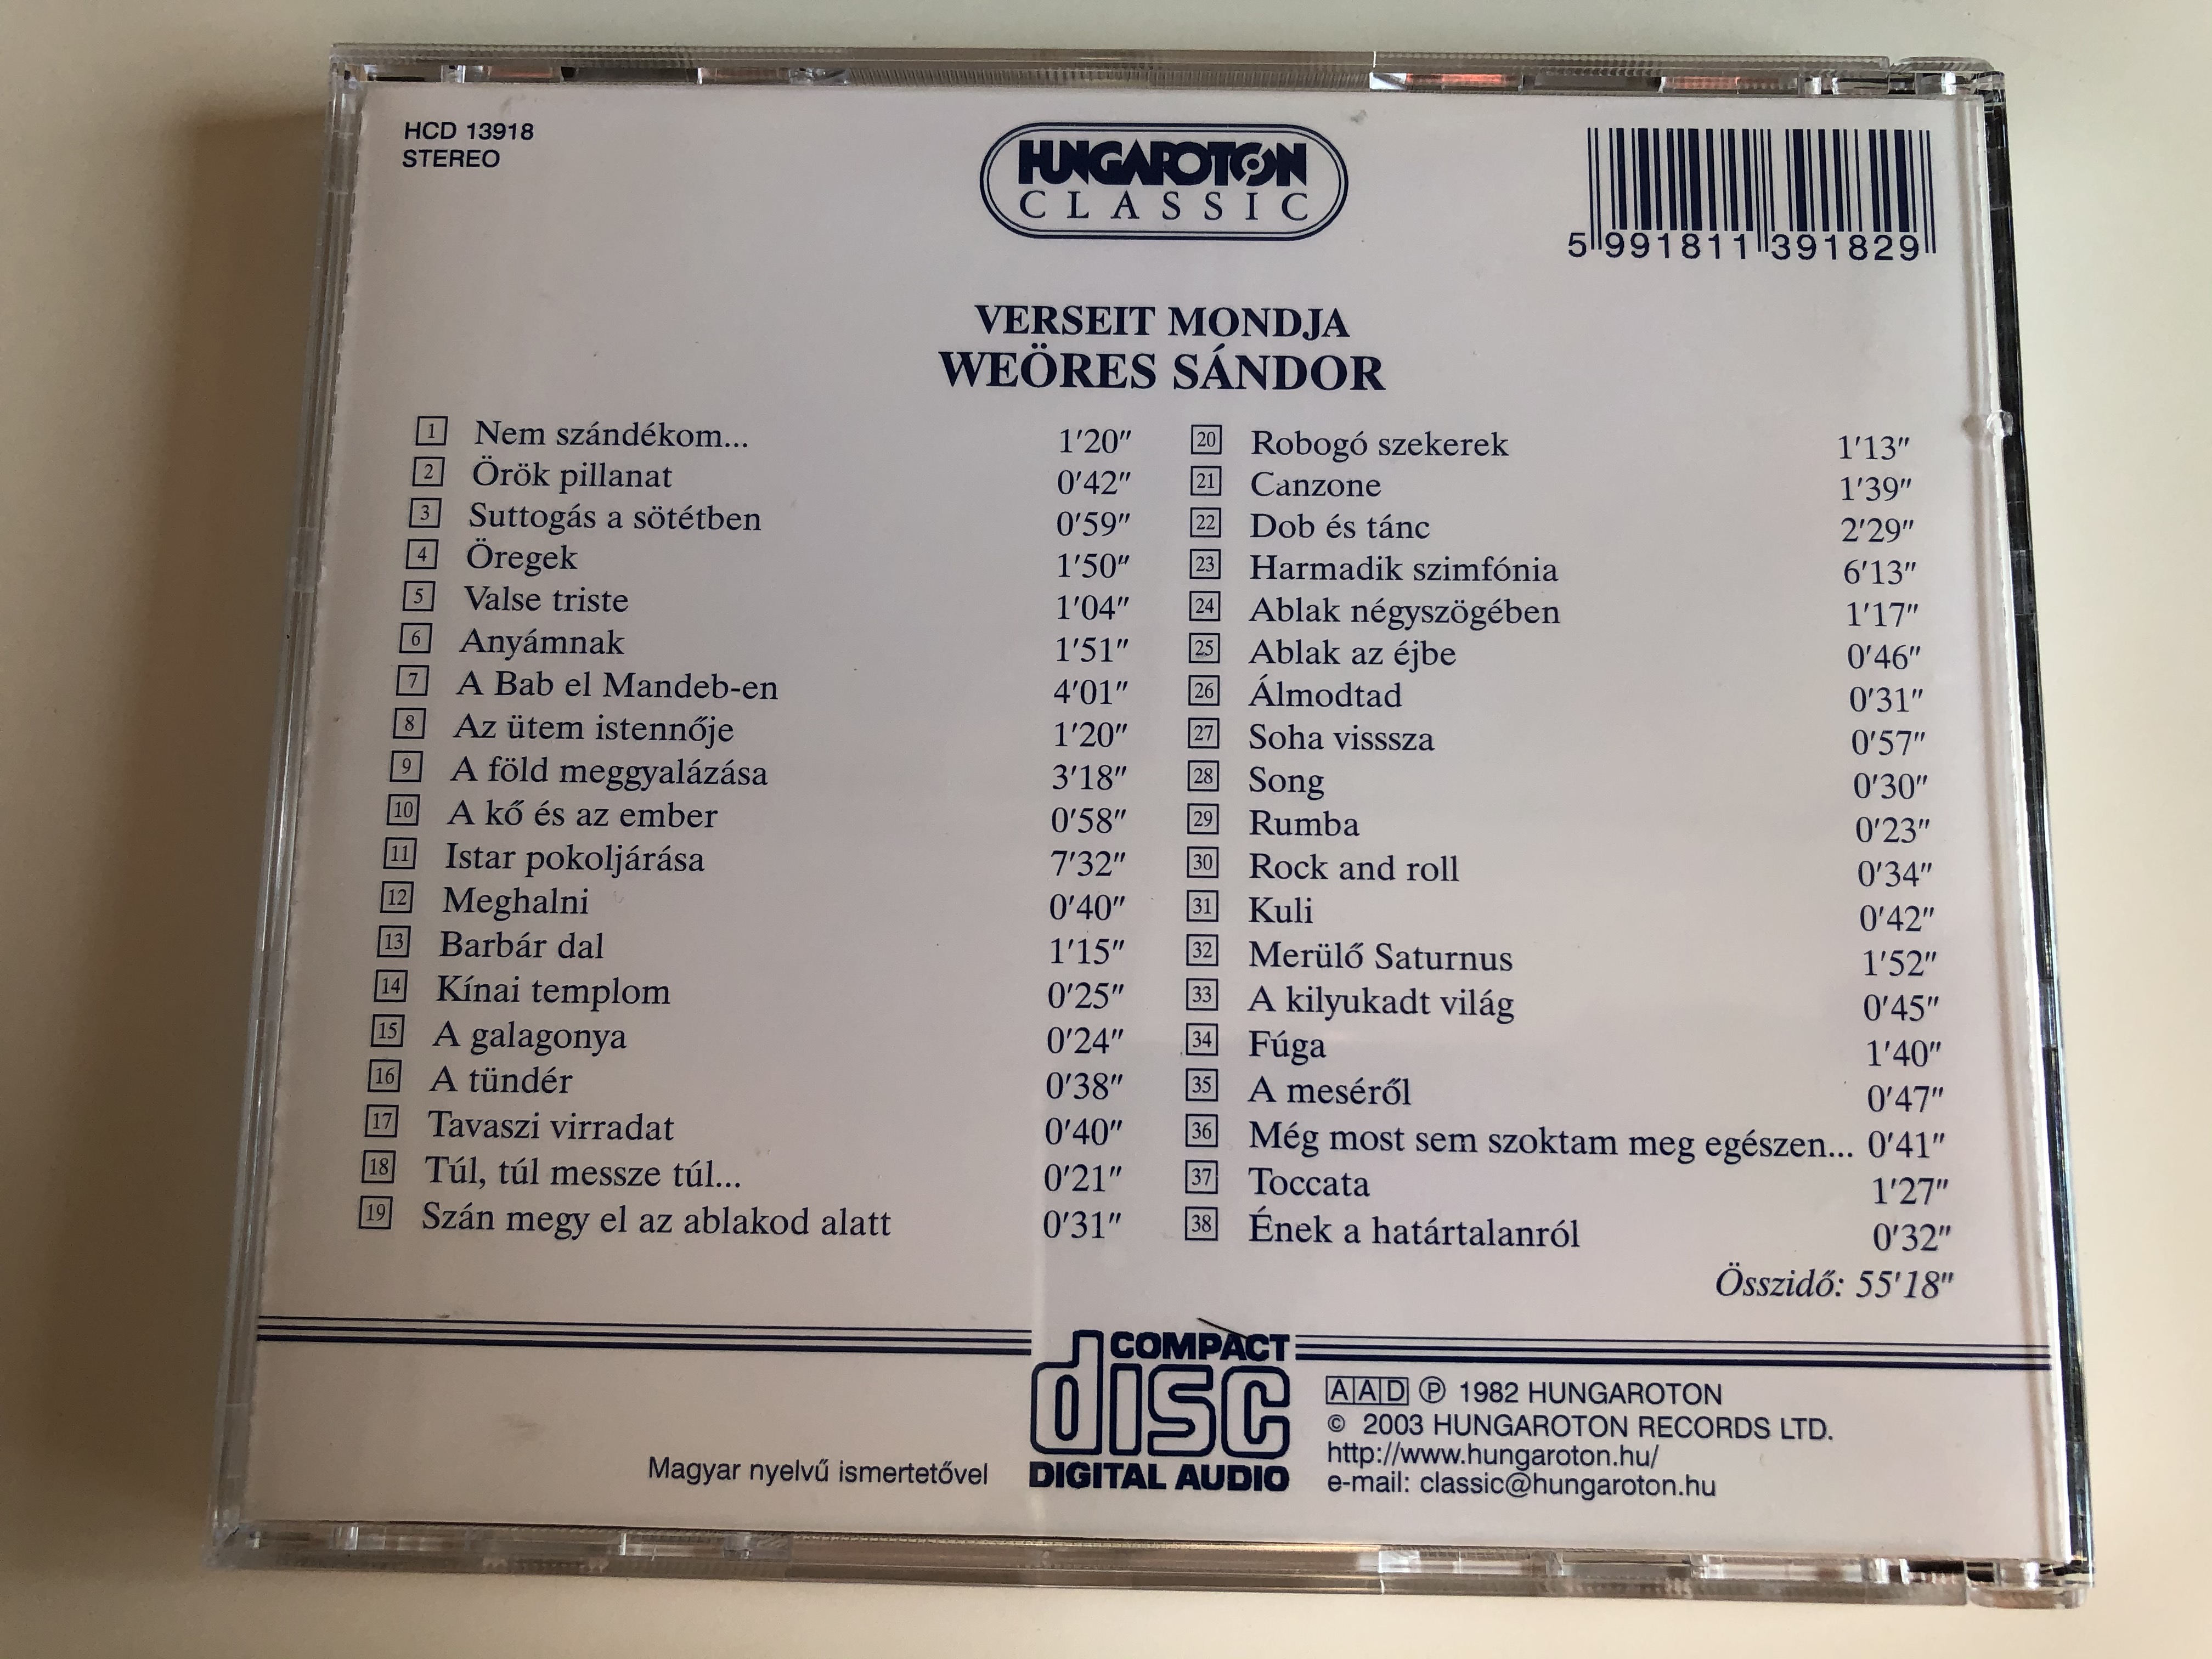 verseit-mondja-weores-sandor-hungaroton-classic-audio-cd-1982-stereo-hcd-13918-4-.jpg